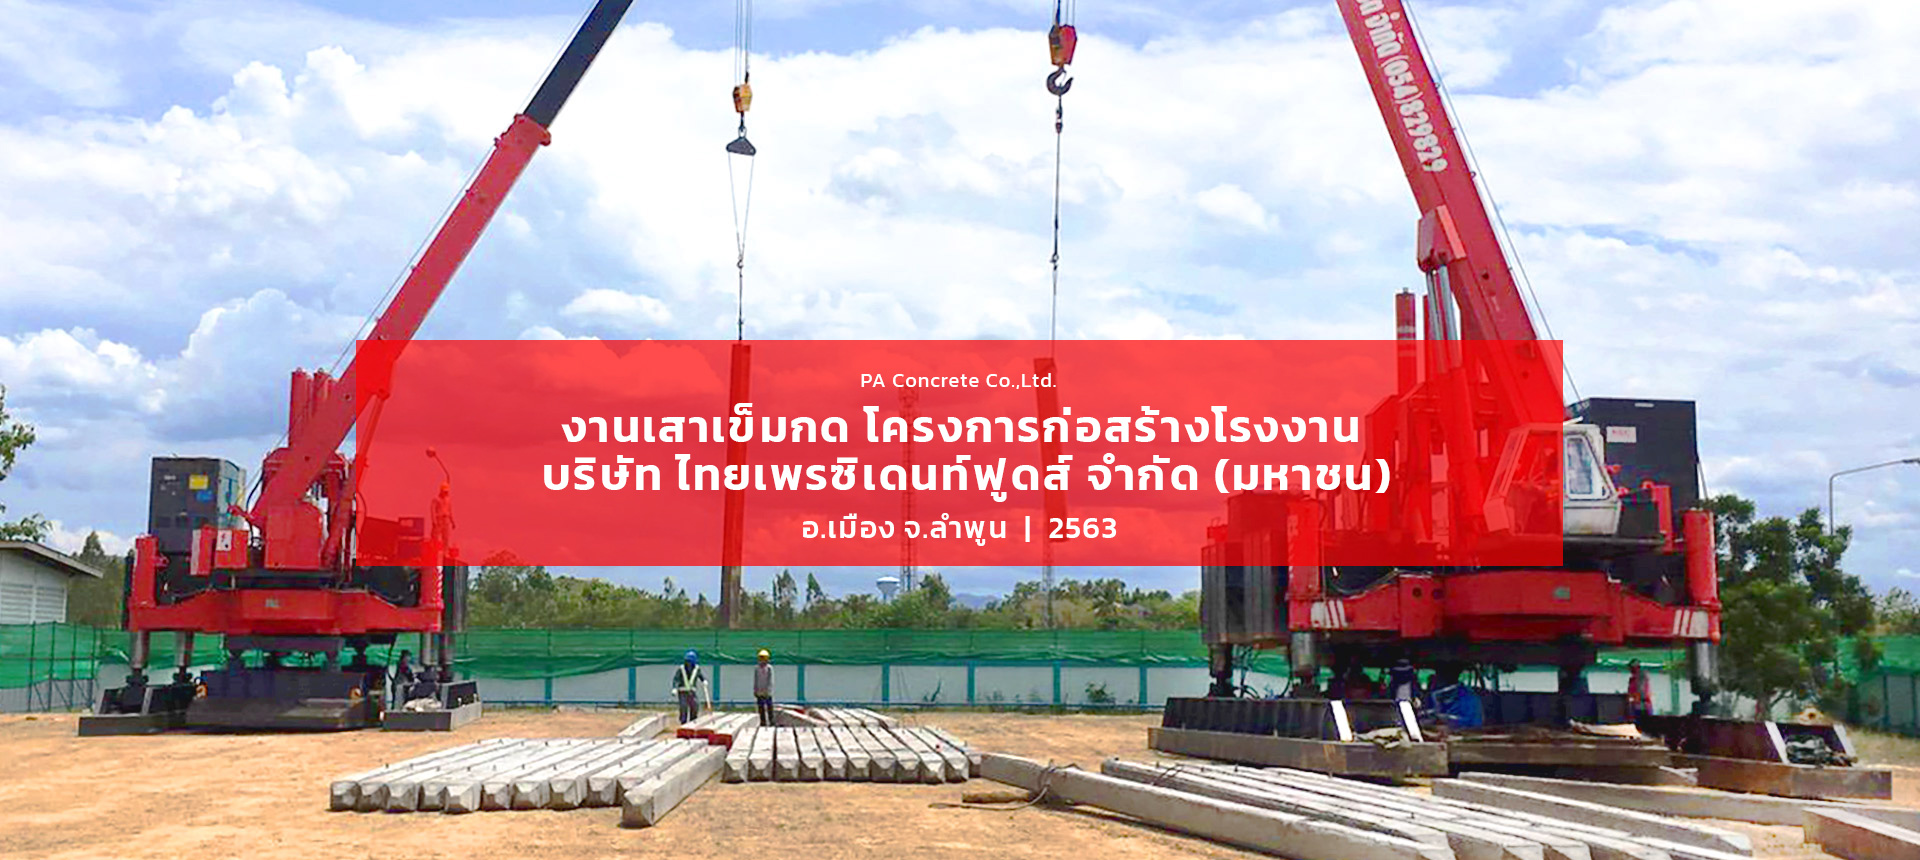 thai-presidents-food-our-work-PA-concrete